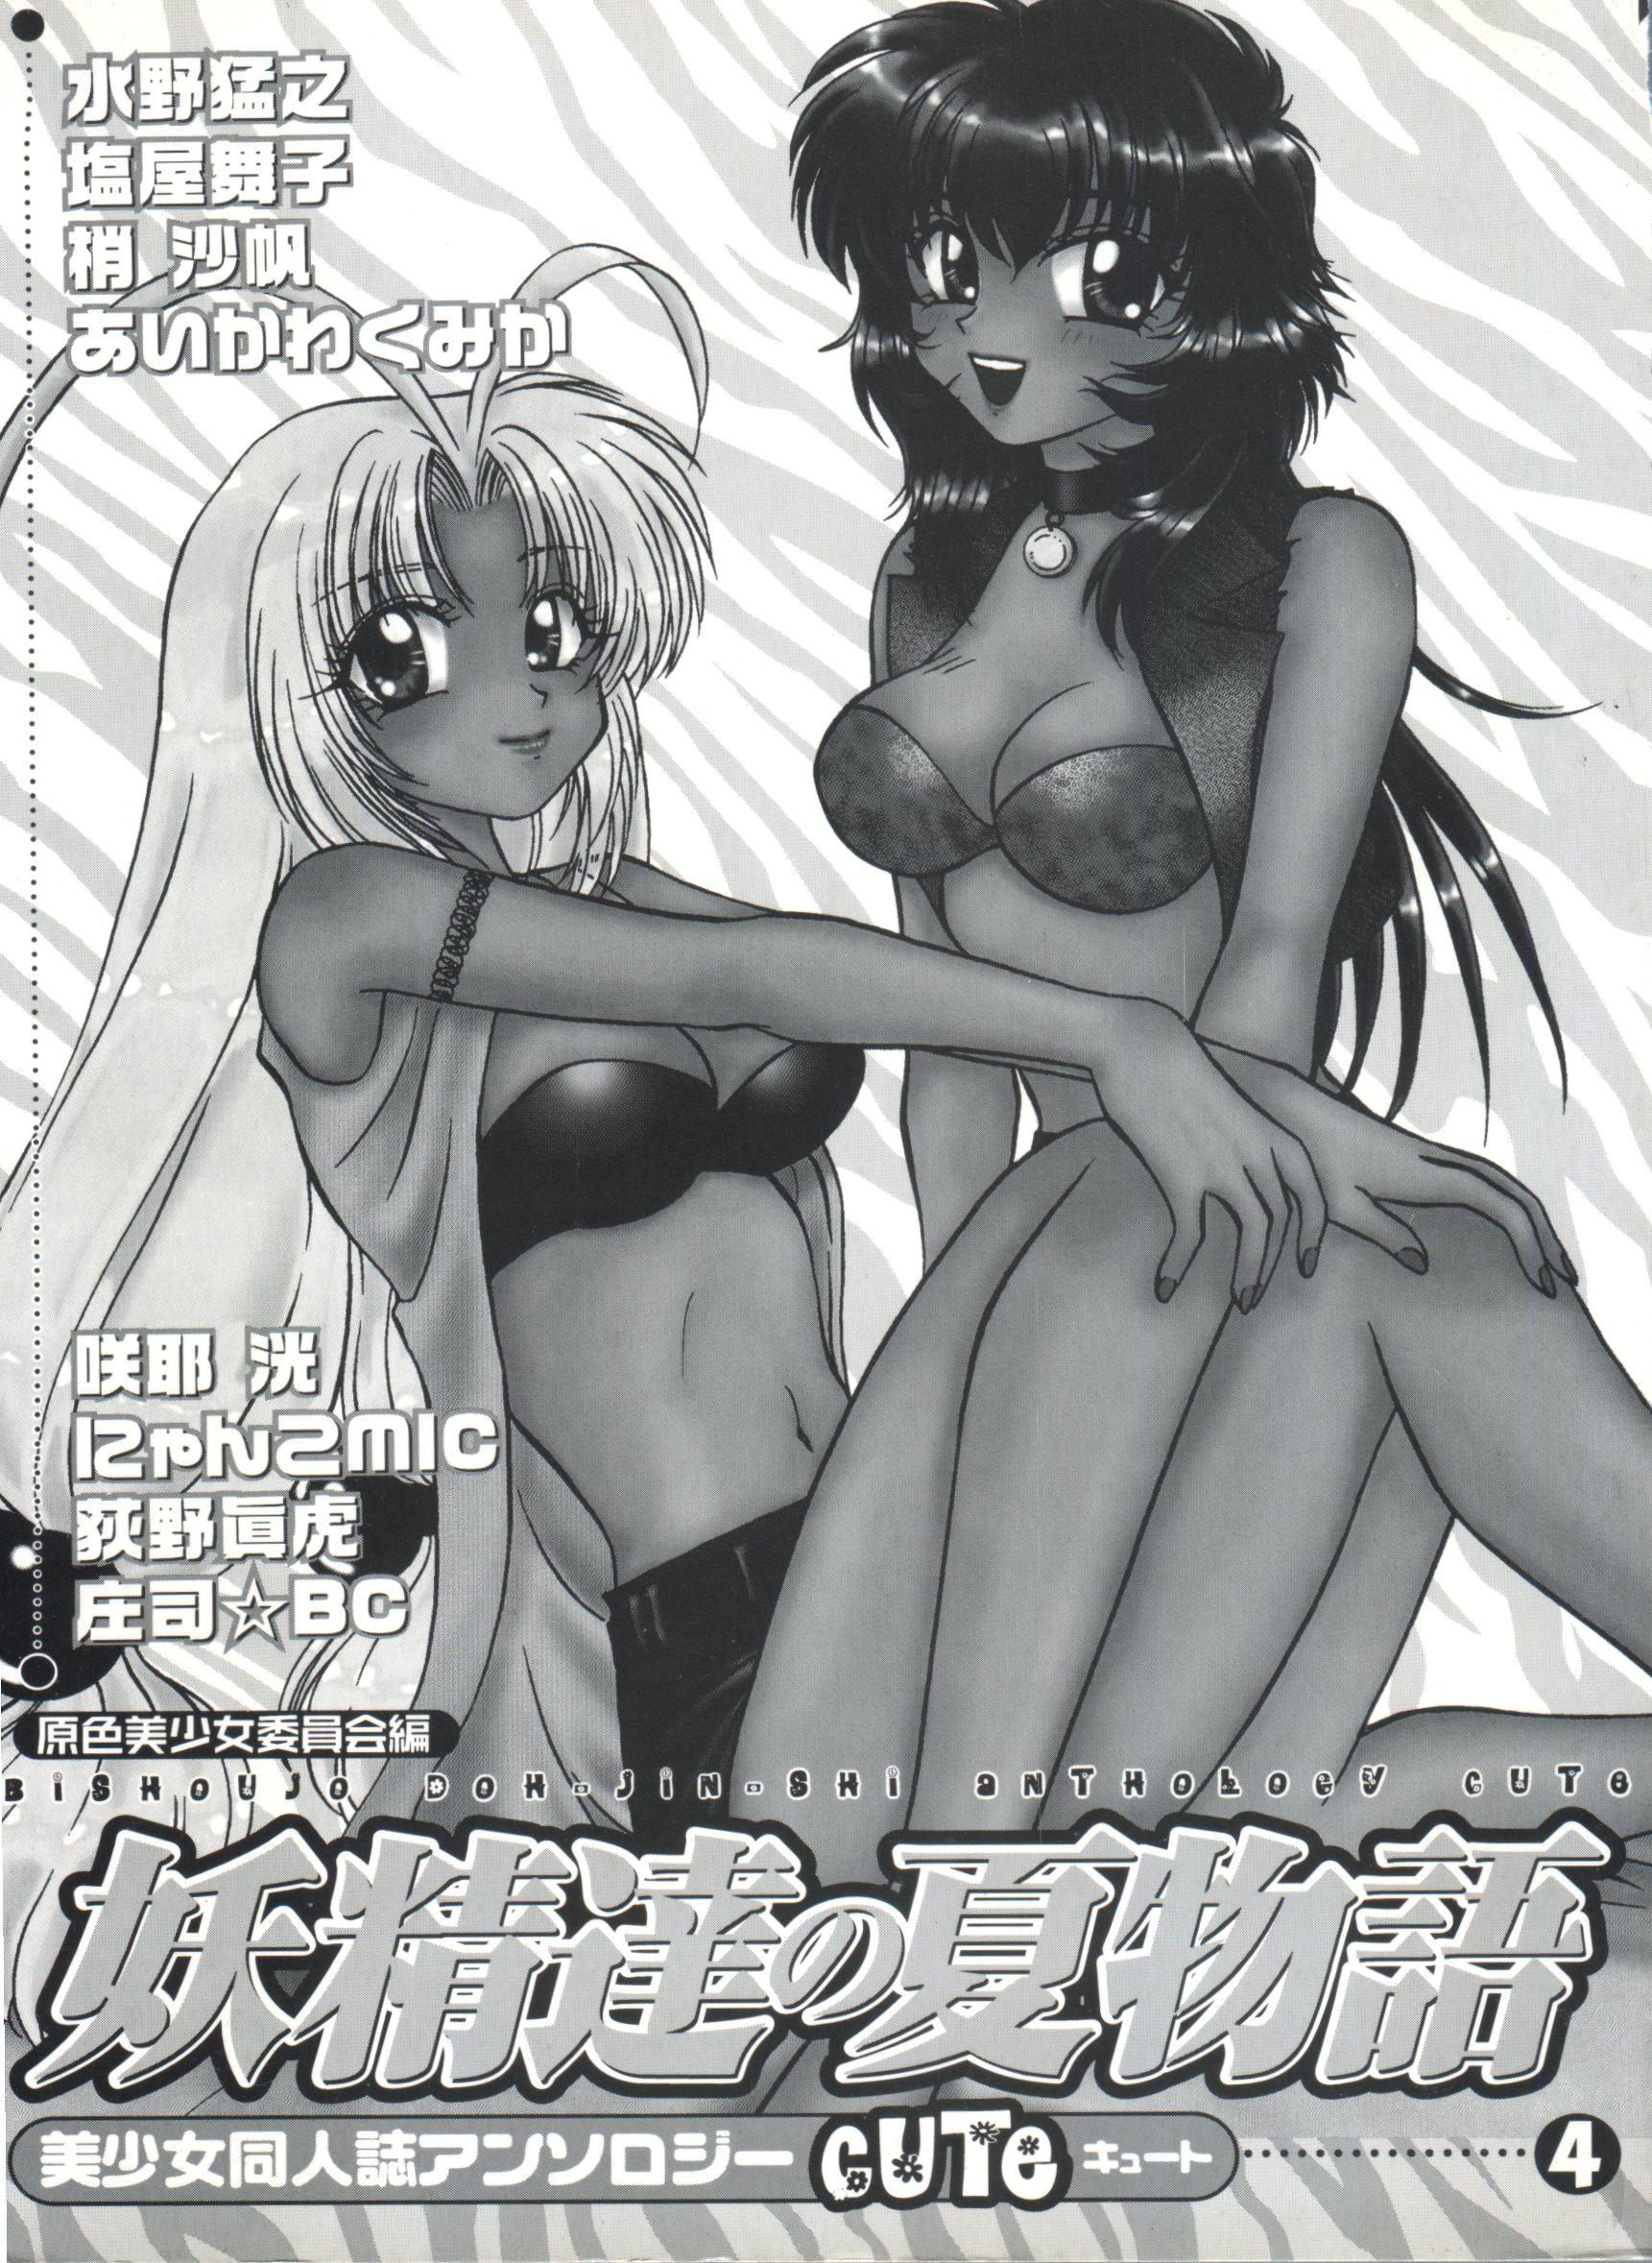 Bunduda Bishoujo Doujinshi Anthology Cute 4 - Sailor moon To heart Magic knight rayearth Kare kano Yu yu hakusho Kamikaze kaitou jeanne Sex - Page 2